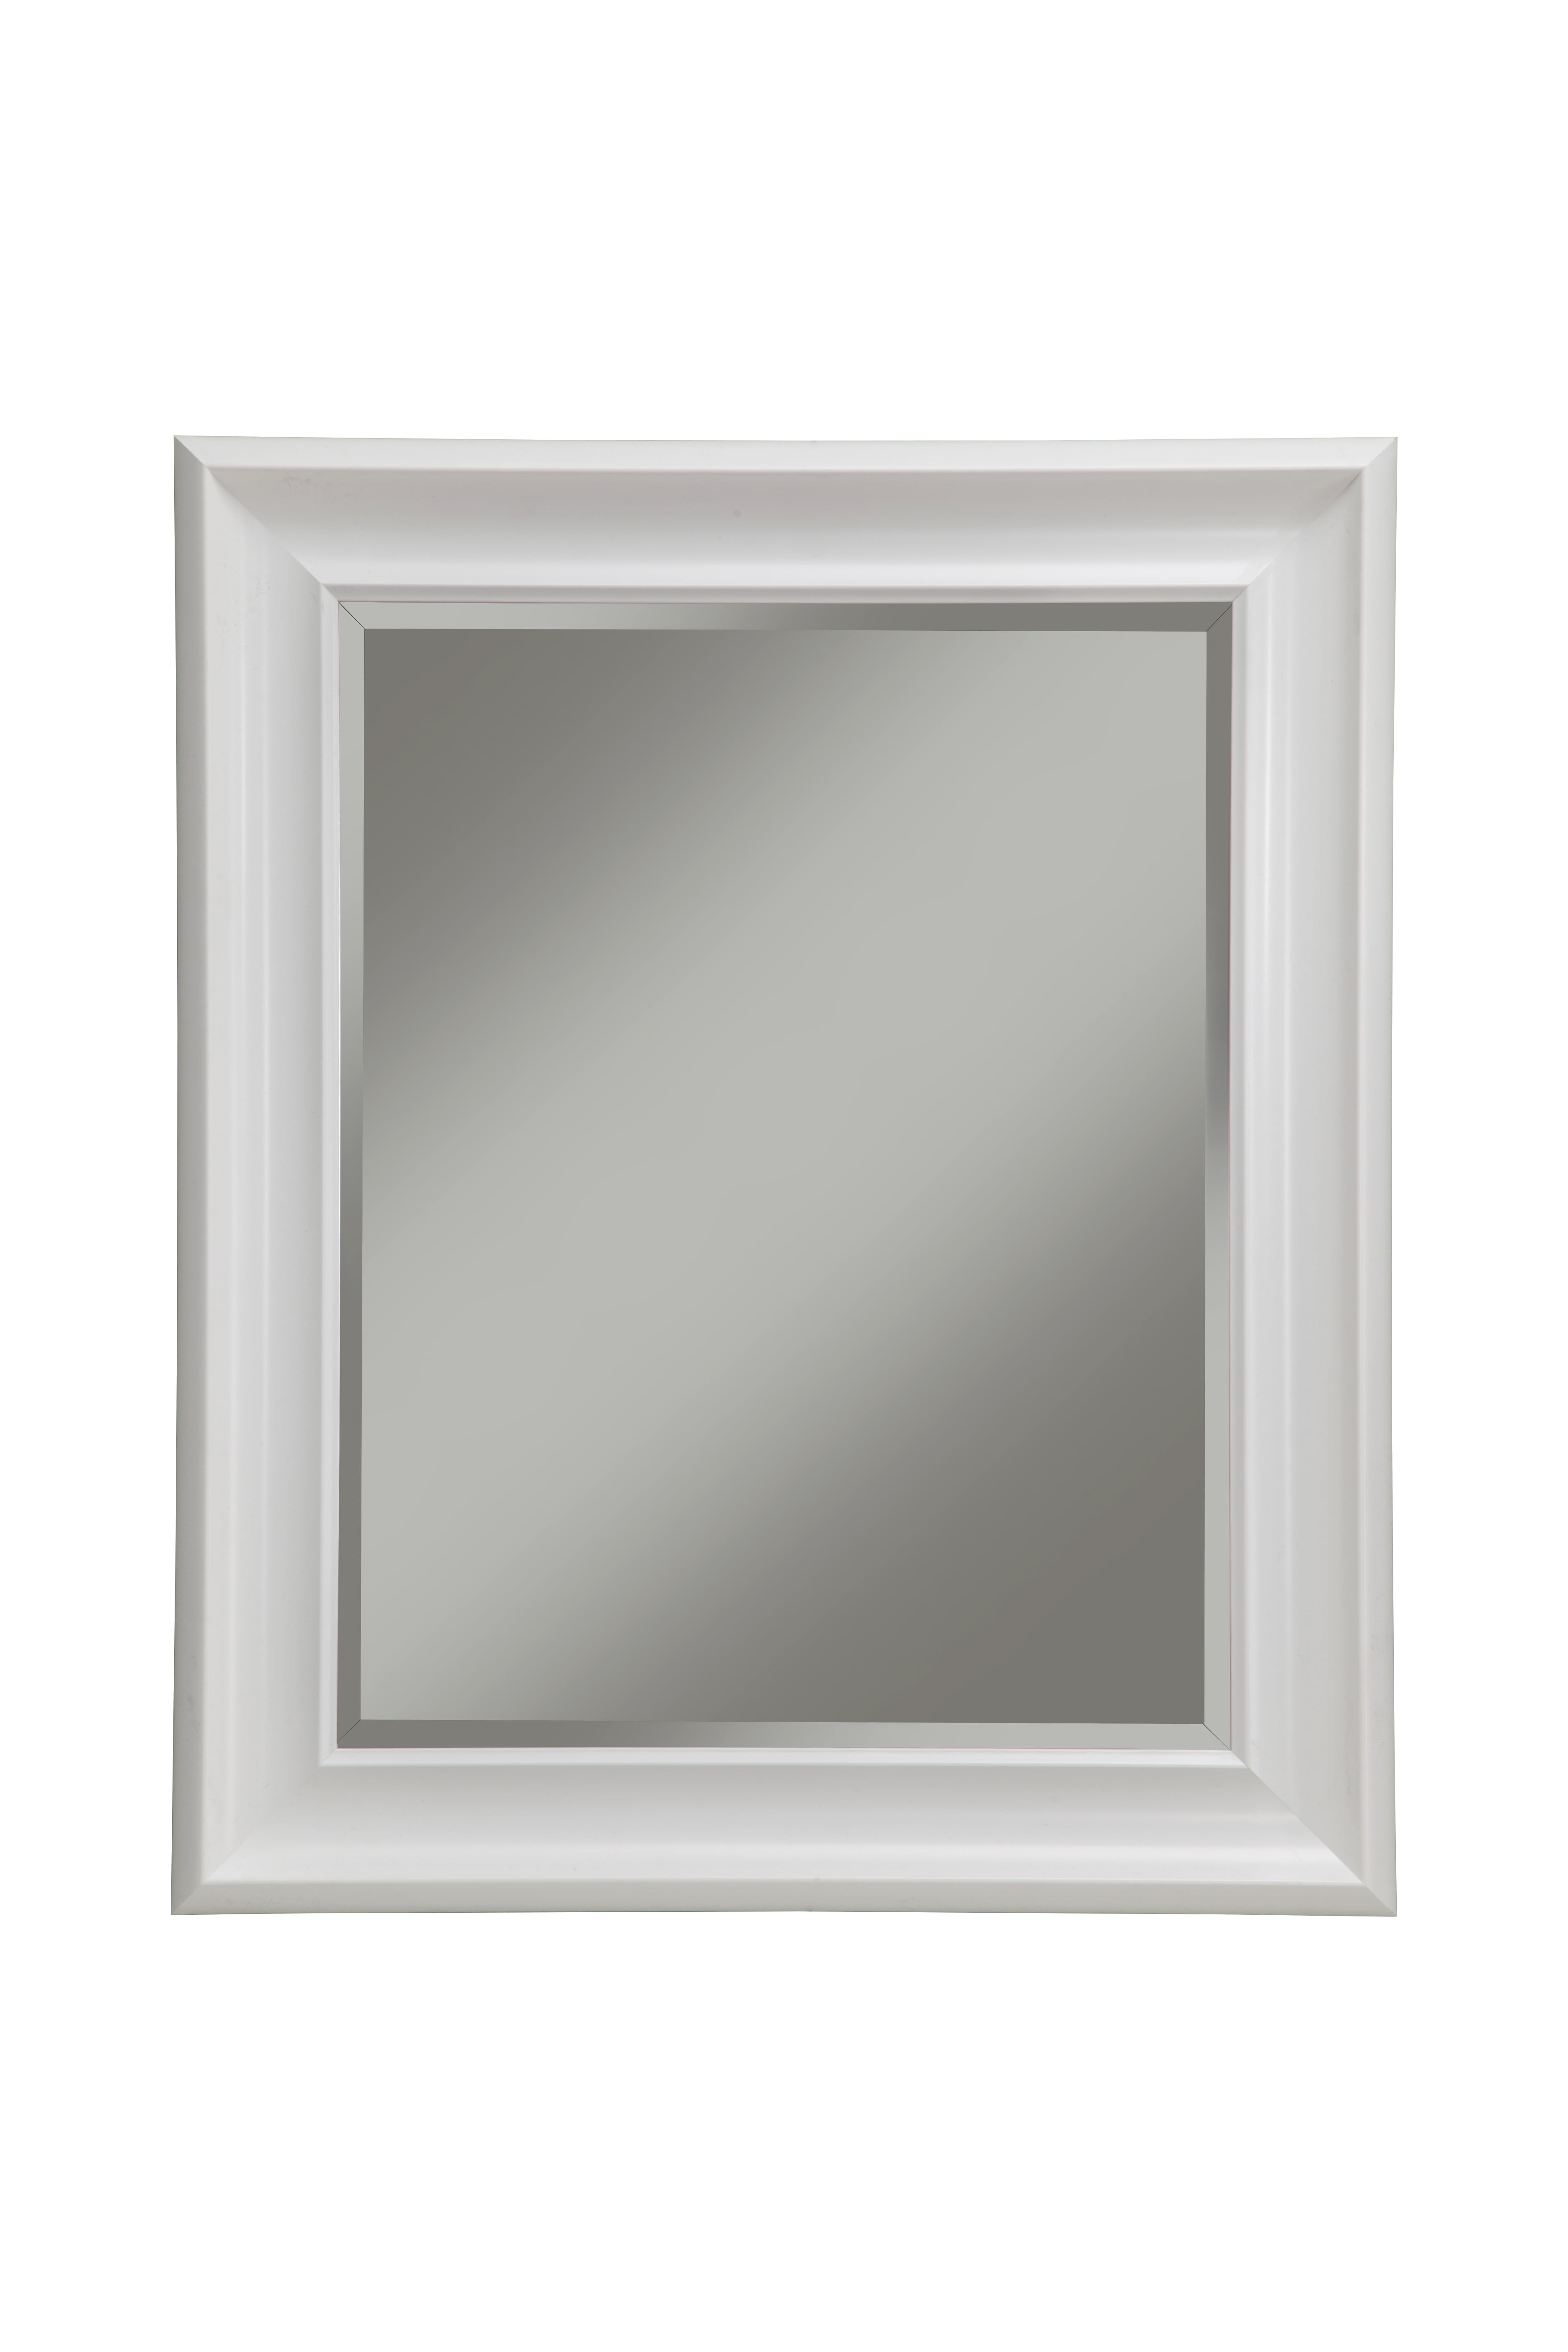 White Wall Beveled Mirror 36 X30 By, 36 X 40 White Framed Mirror